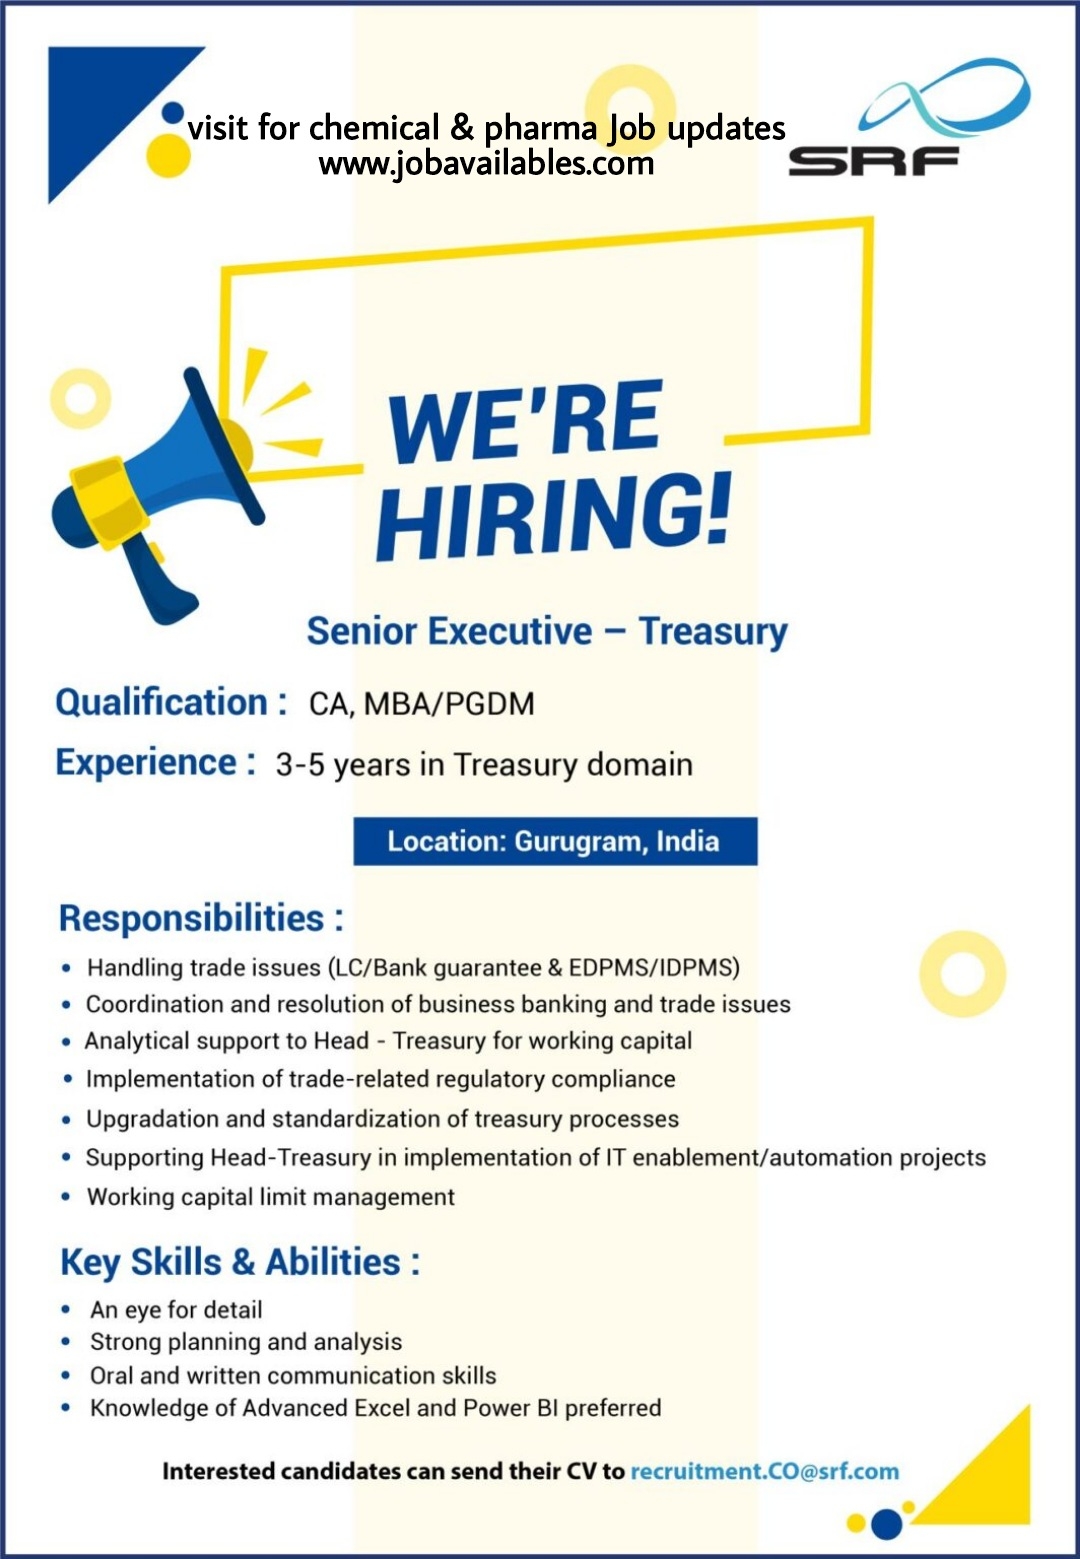 Job Availables, SRF Ltd Job Opening For PGDM/ MBA/ CA - Senior Executive (Treasury)